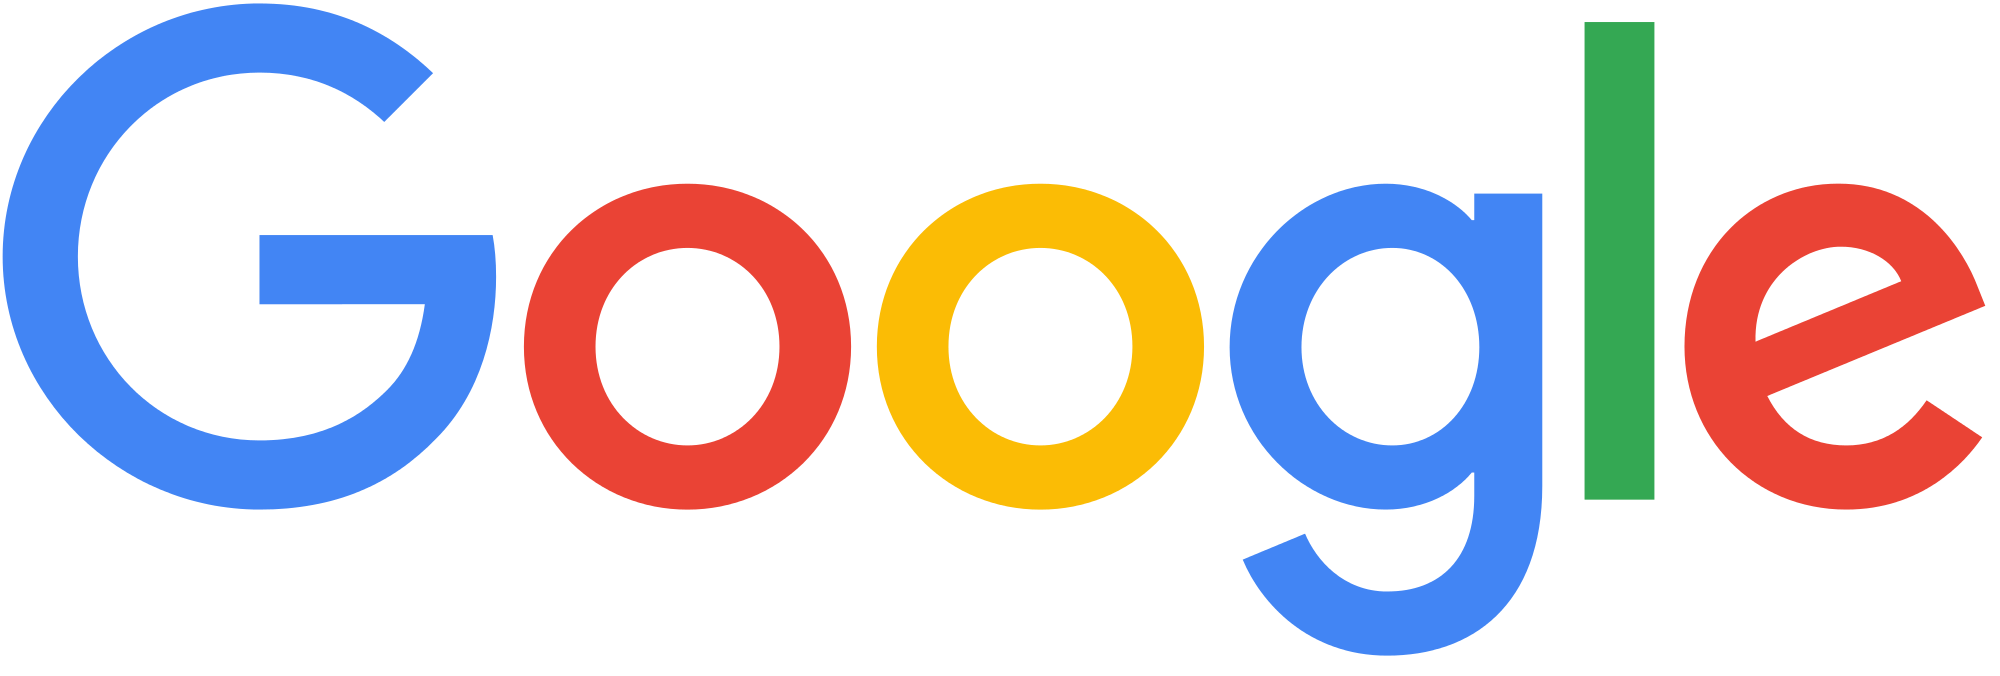 https://warrenenskat.com/wp-content/uploads/2019/01/Logo-Google.png